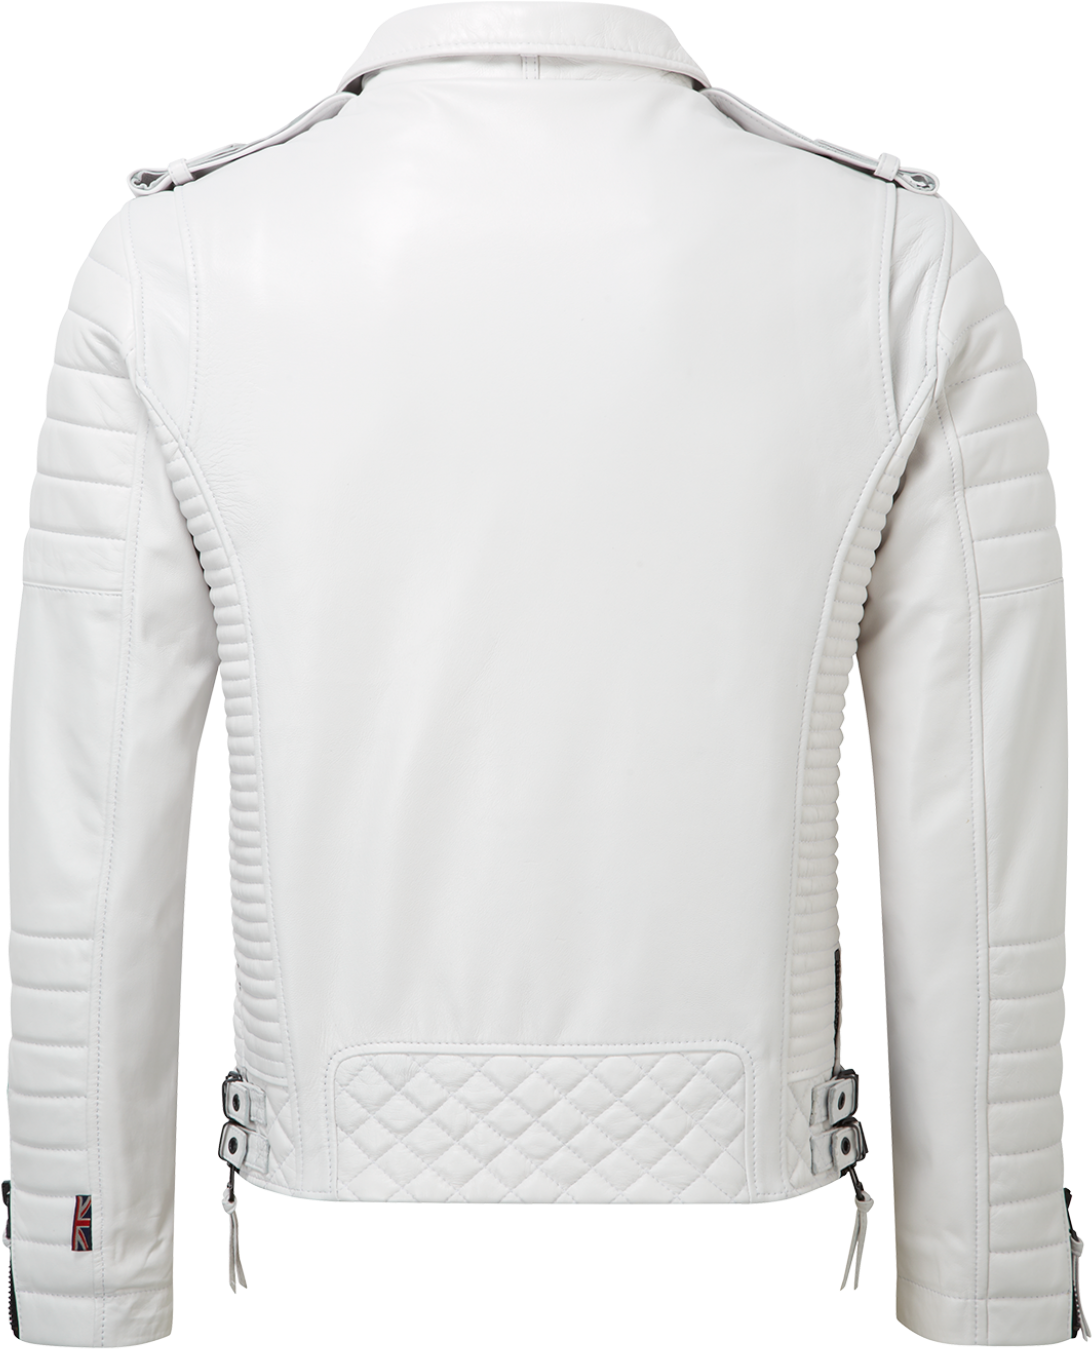 Bear- White Moto Sheepskin Leather Jacket - Back Of White Leather Jacket (1280x1540), Png Download